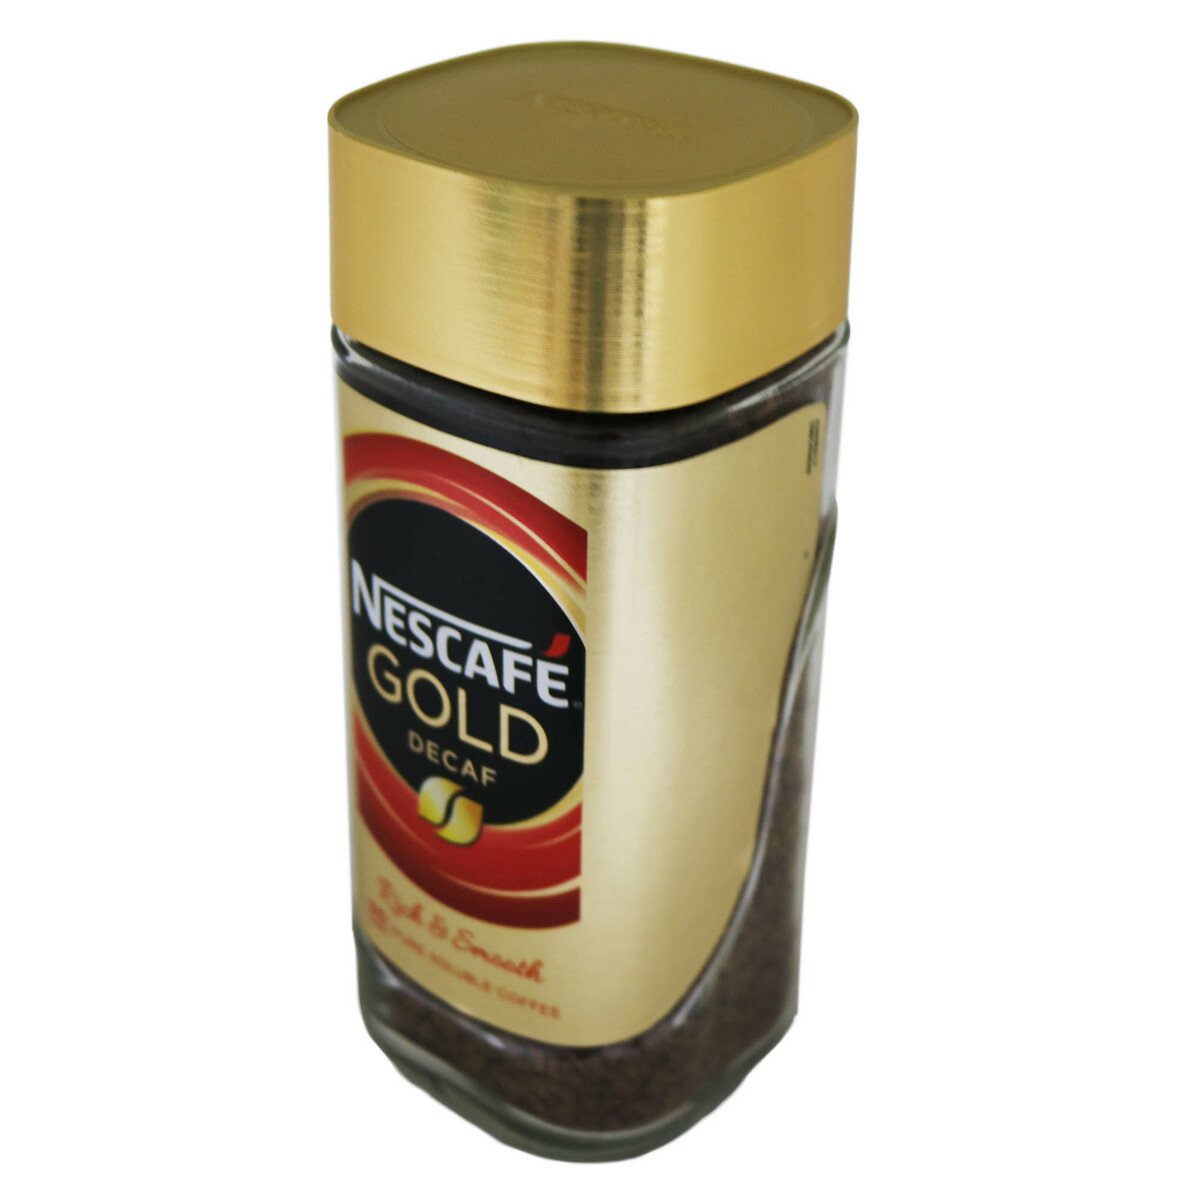 Nestle Nescafe Gold Decafenate 100g